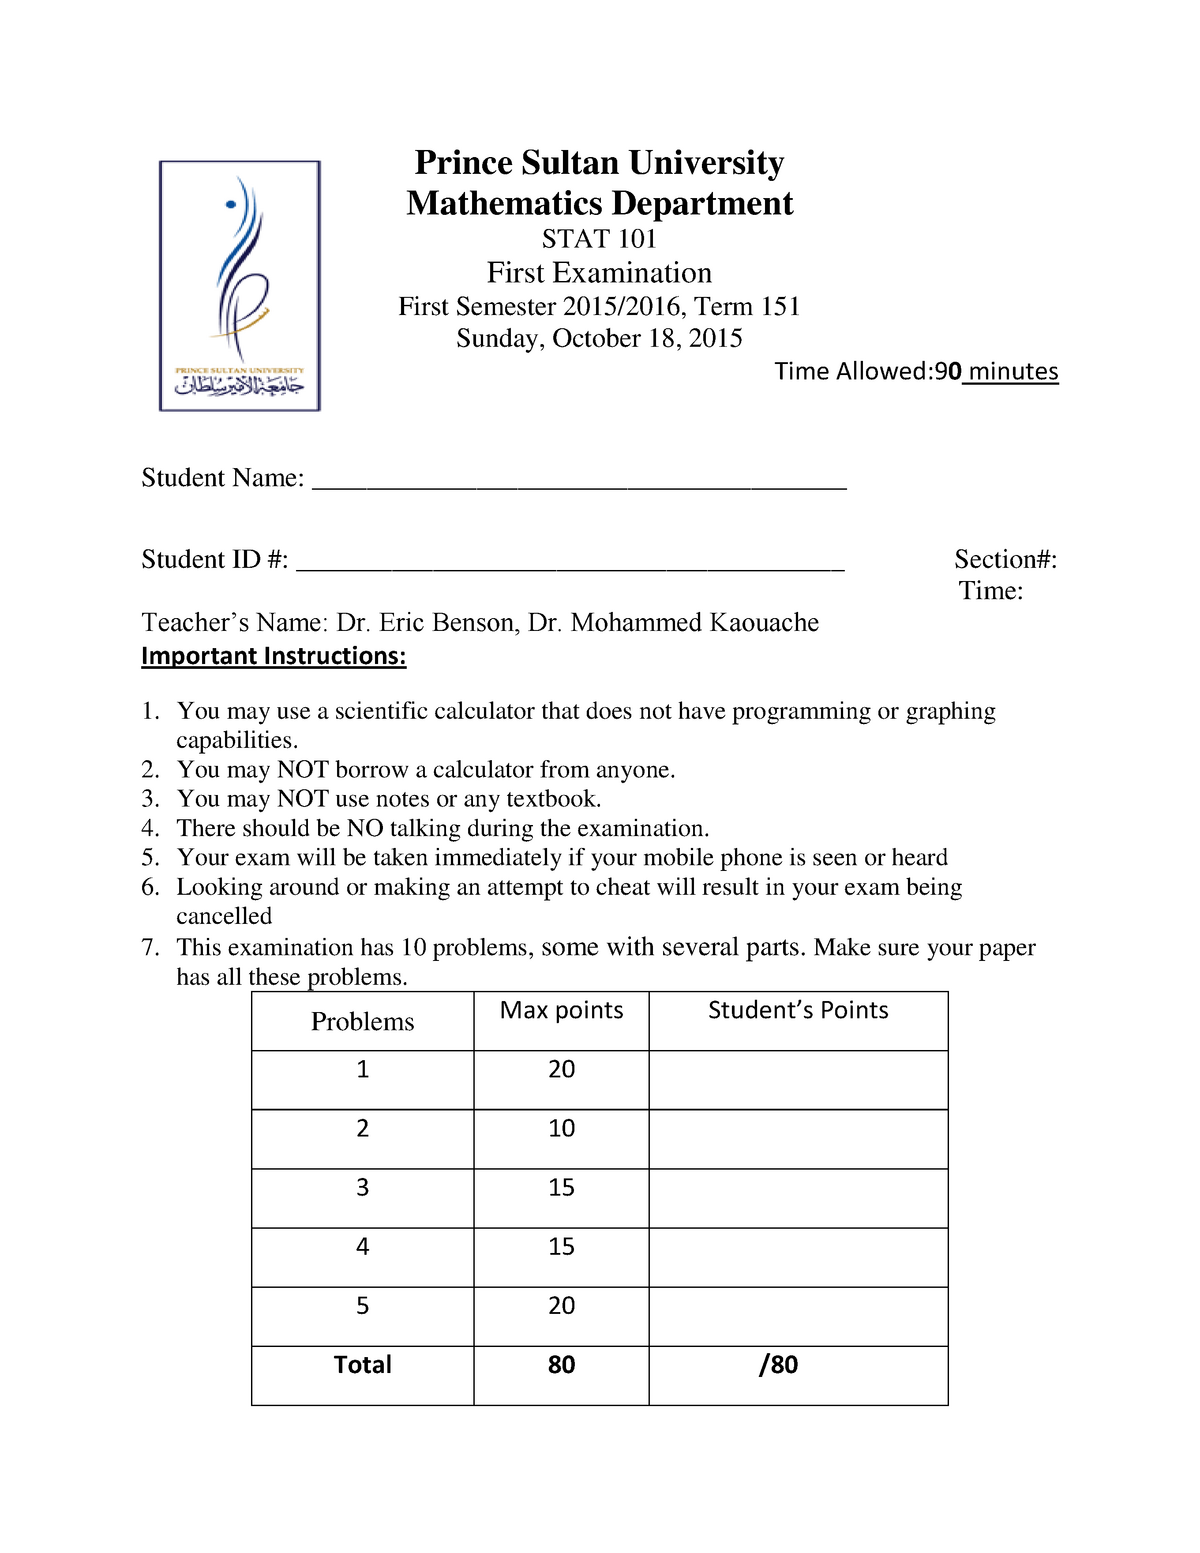 Exam major ex 1 Prince Sultan University Mathematics Department STAT